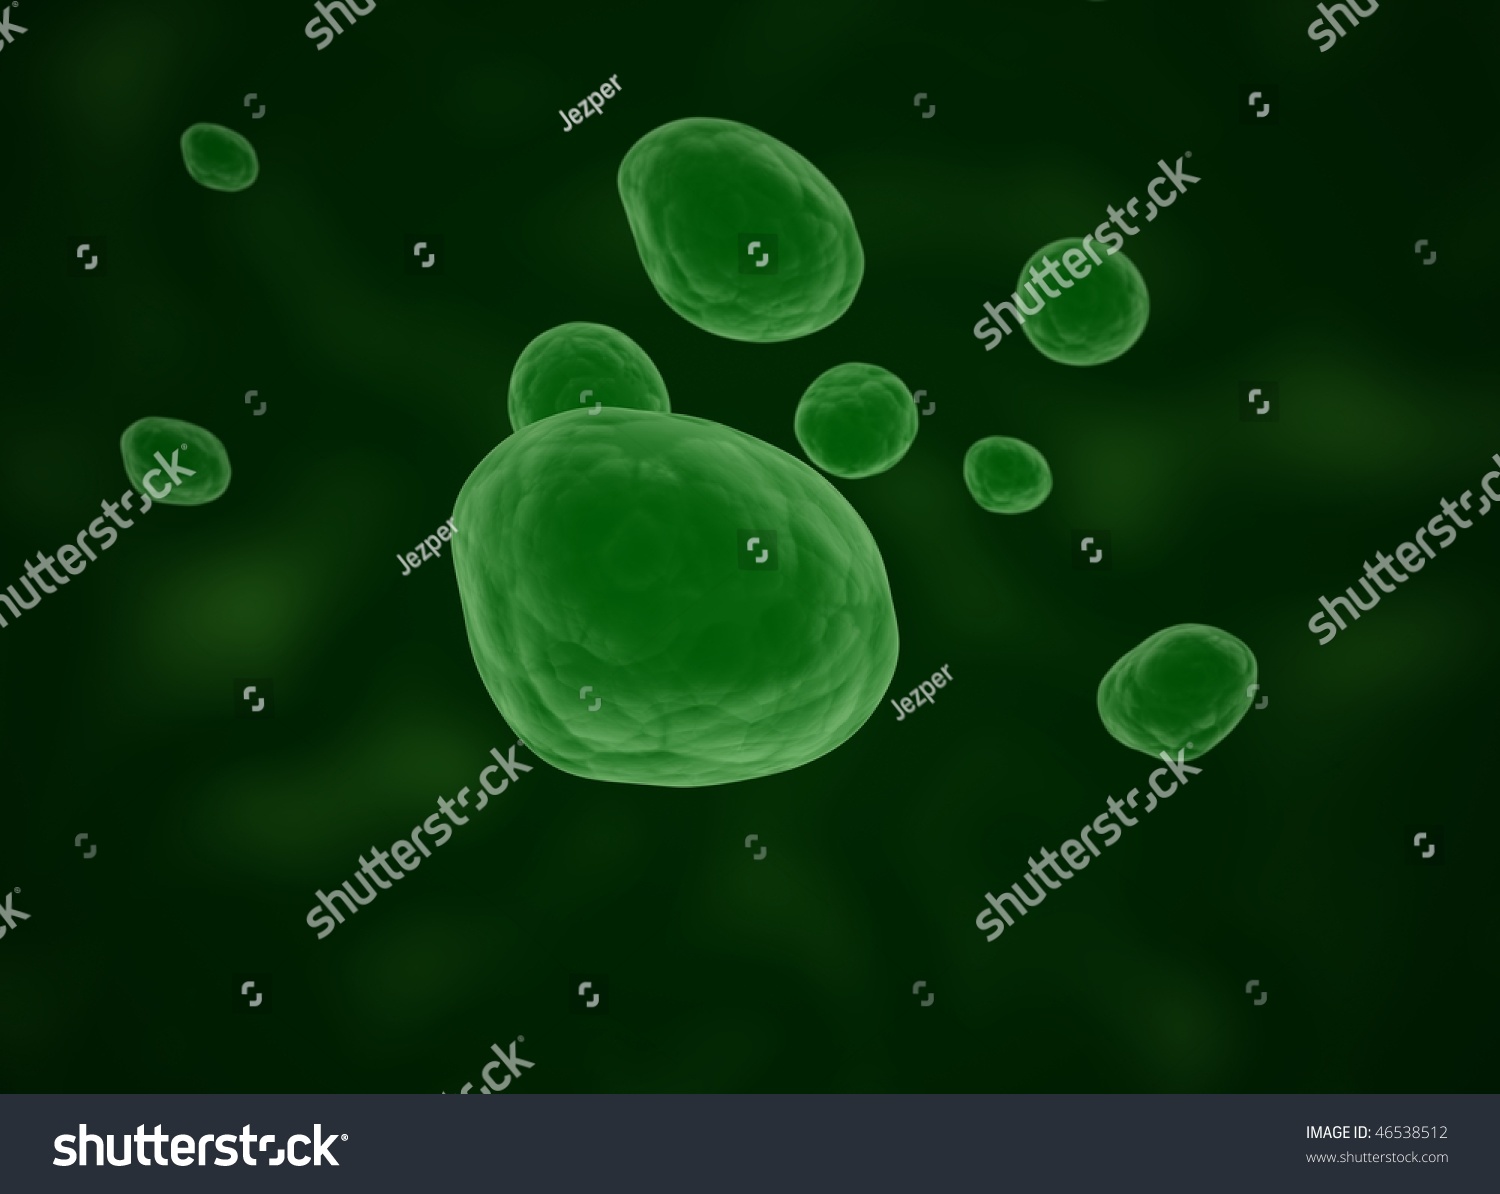 Virus Green Bacteria Stock Illustration 46538512 - Shutterstock